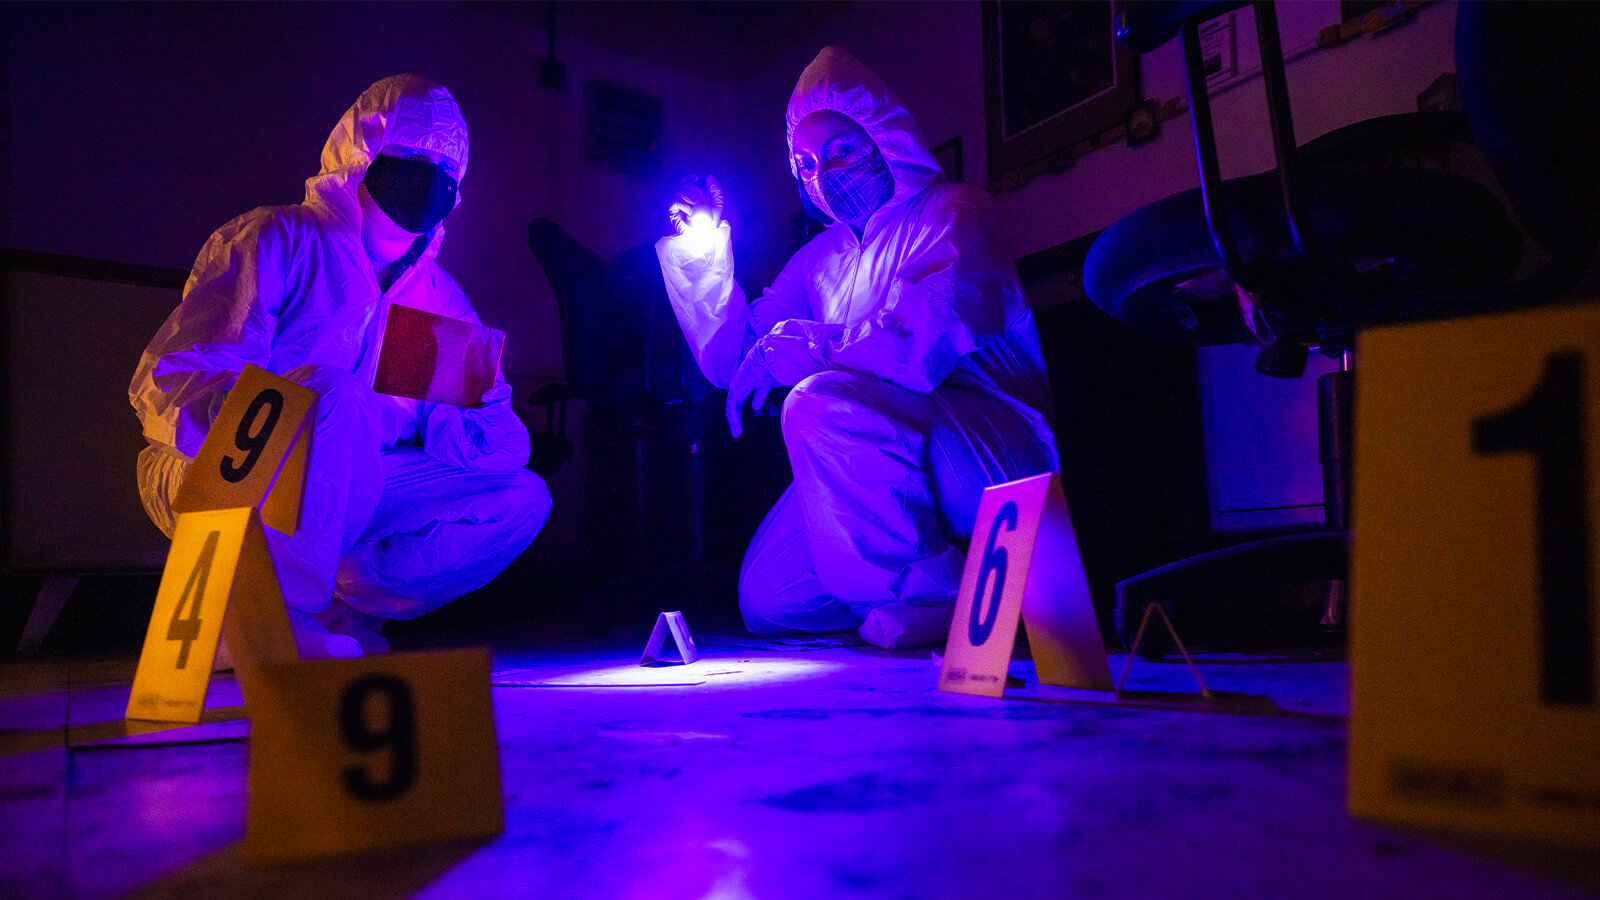 Two student researchers examine a mock crime scene under ultraviolet light